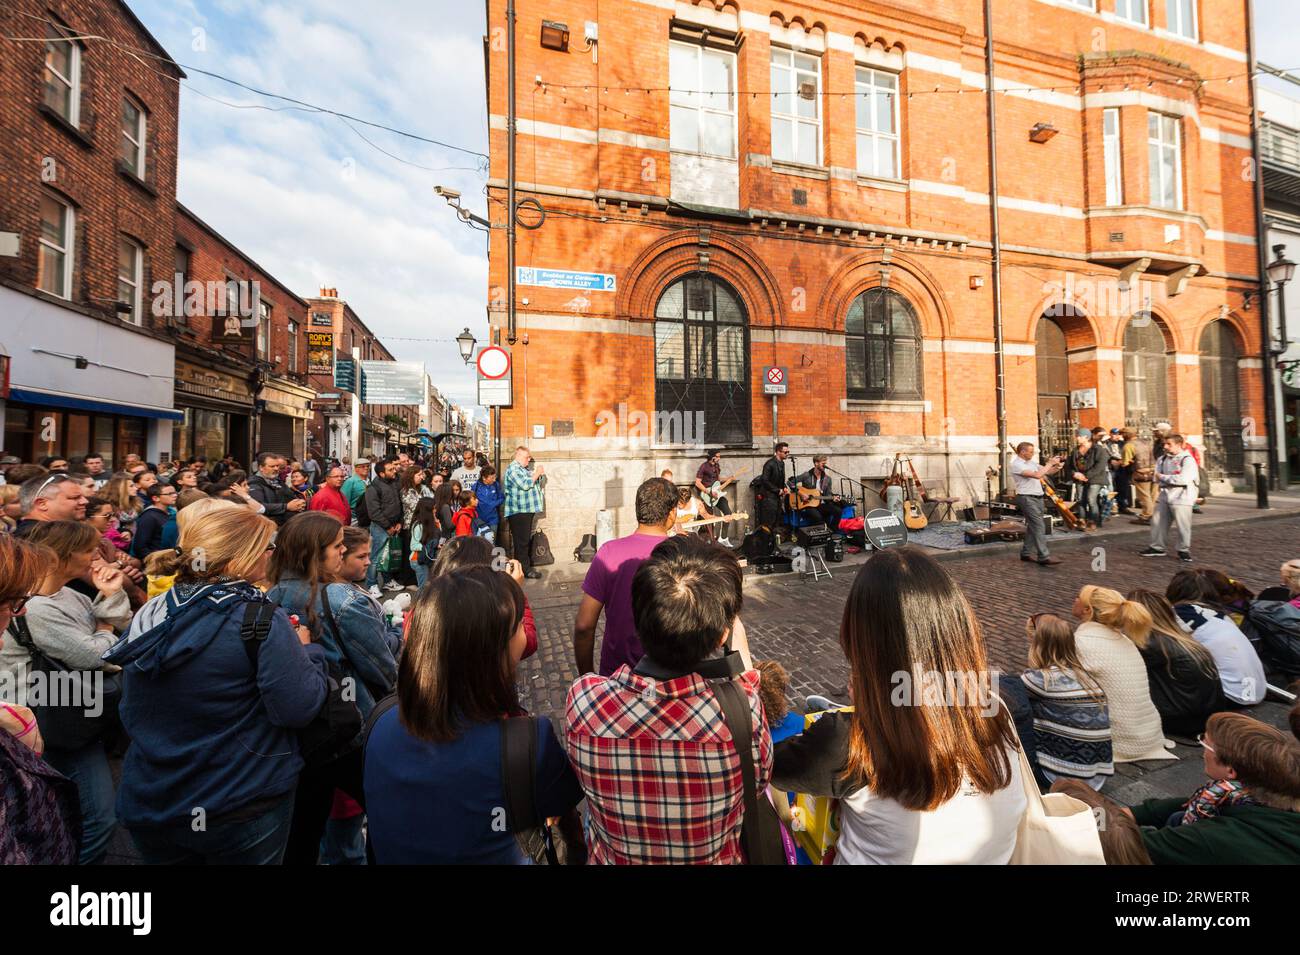 Dublin, Ireland - 08 16, 2015  Throng of people surrounding and filming an Irish street band improvising a musical performance Dublin Temple Bar Stock Photo